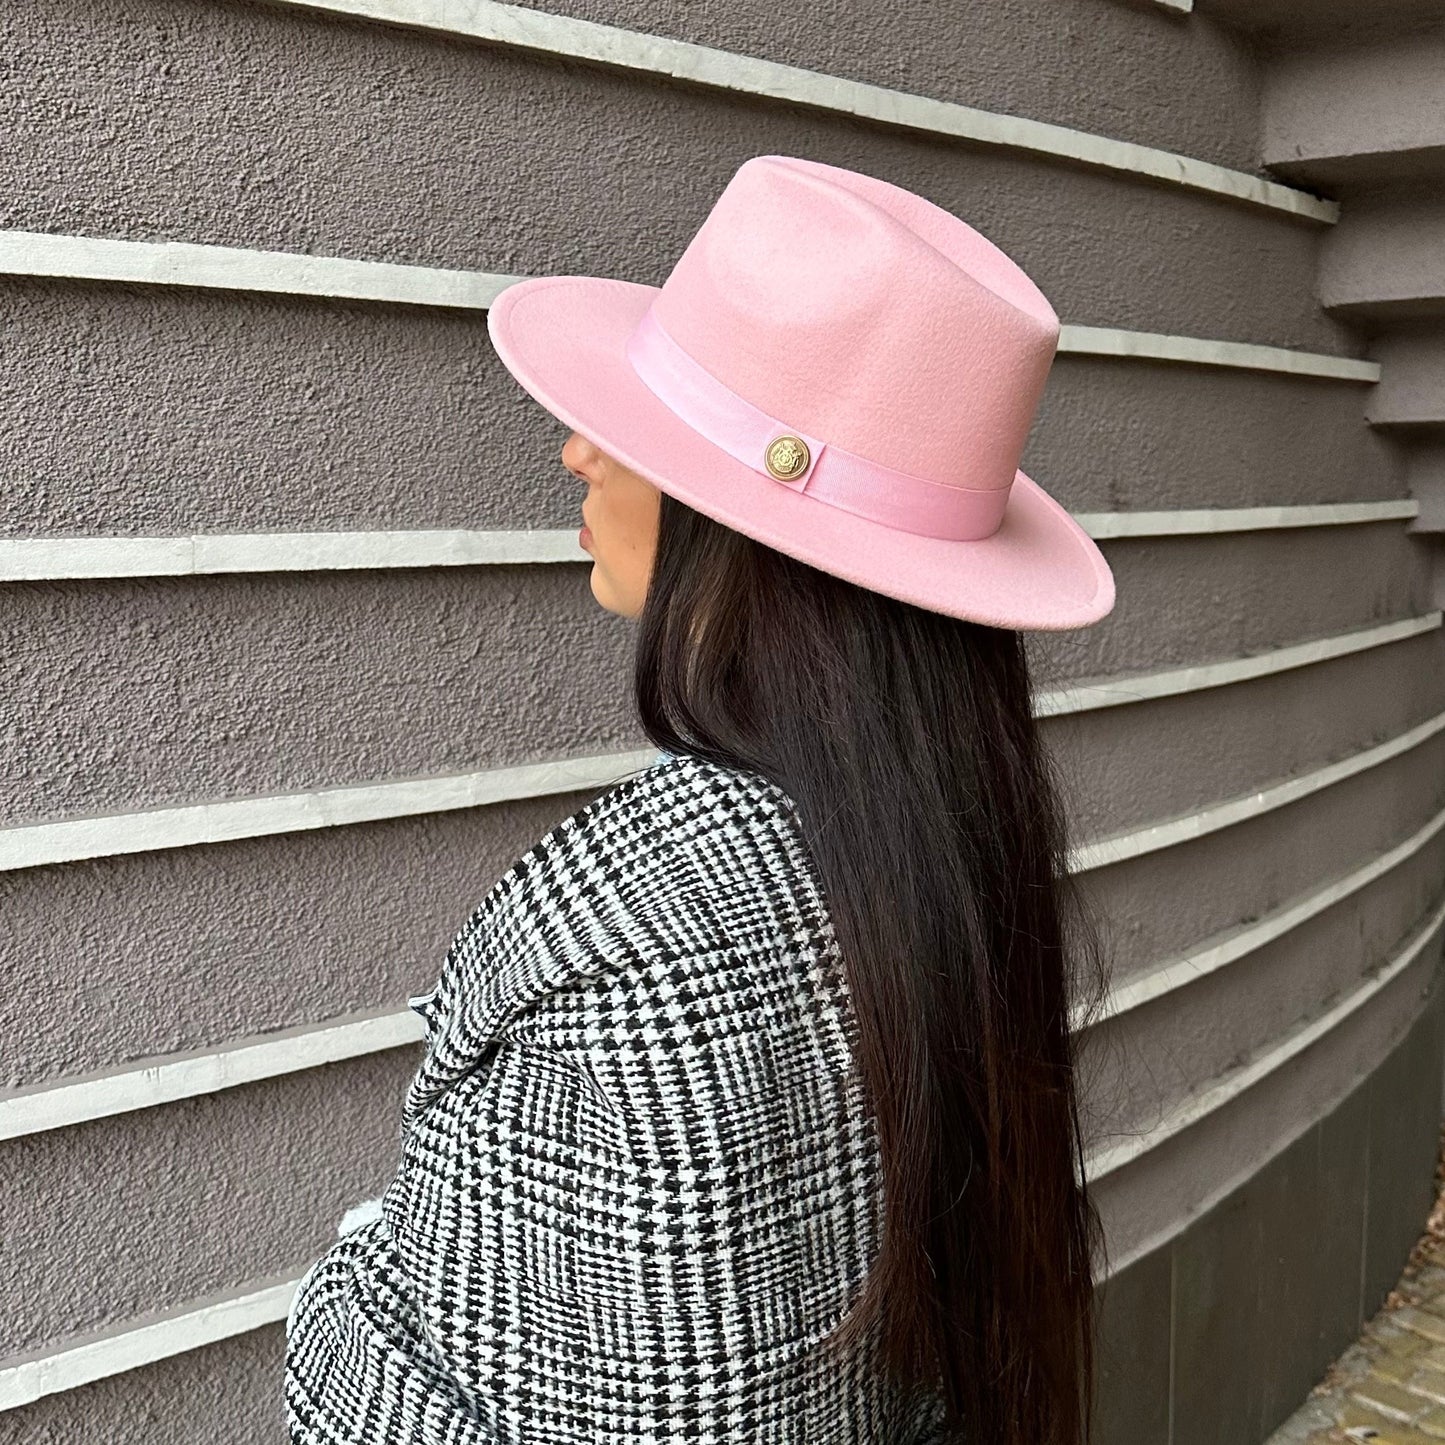 Pink Fedora Hat